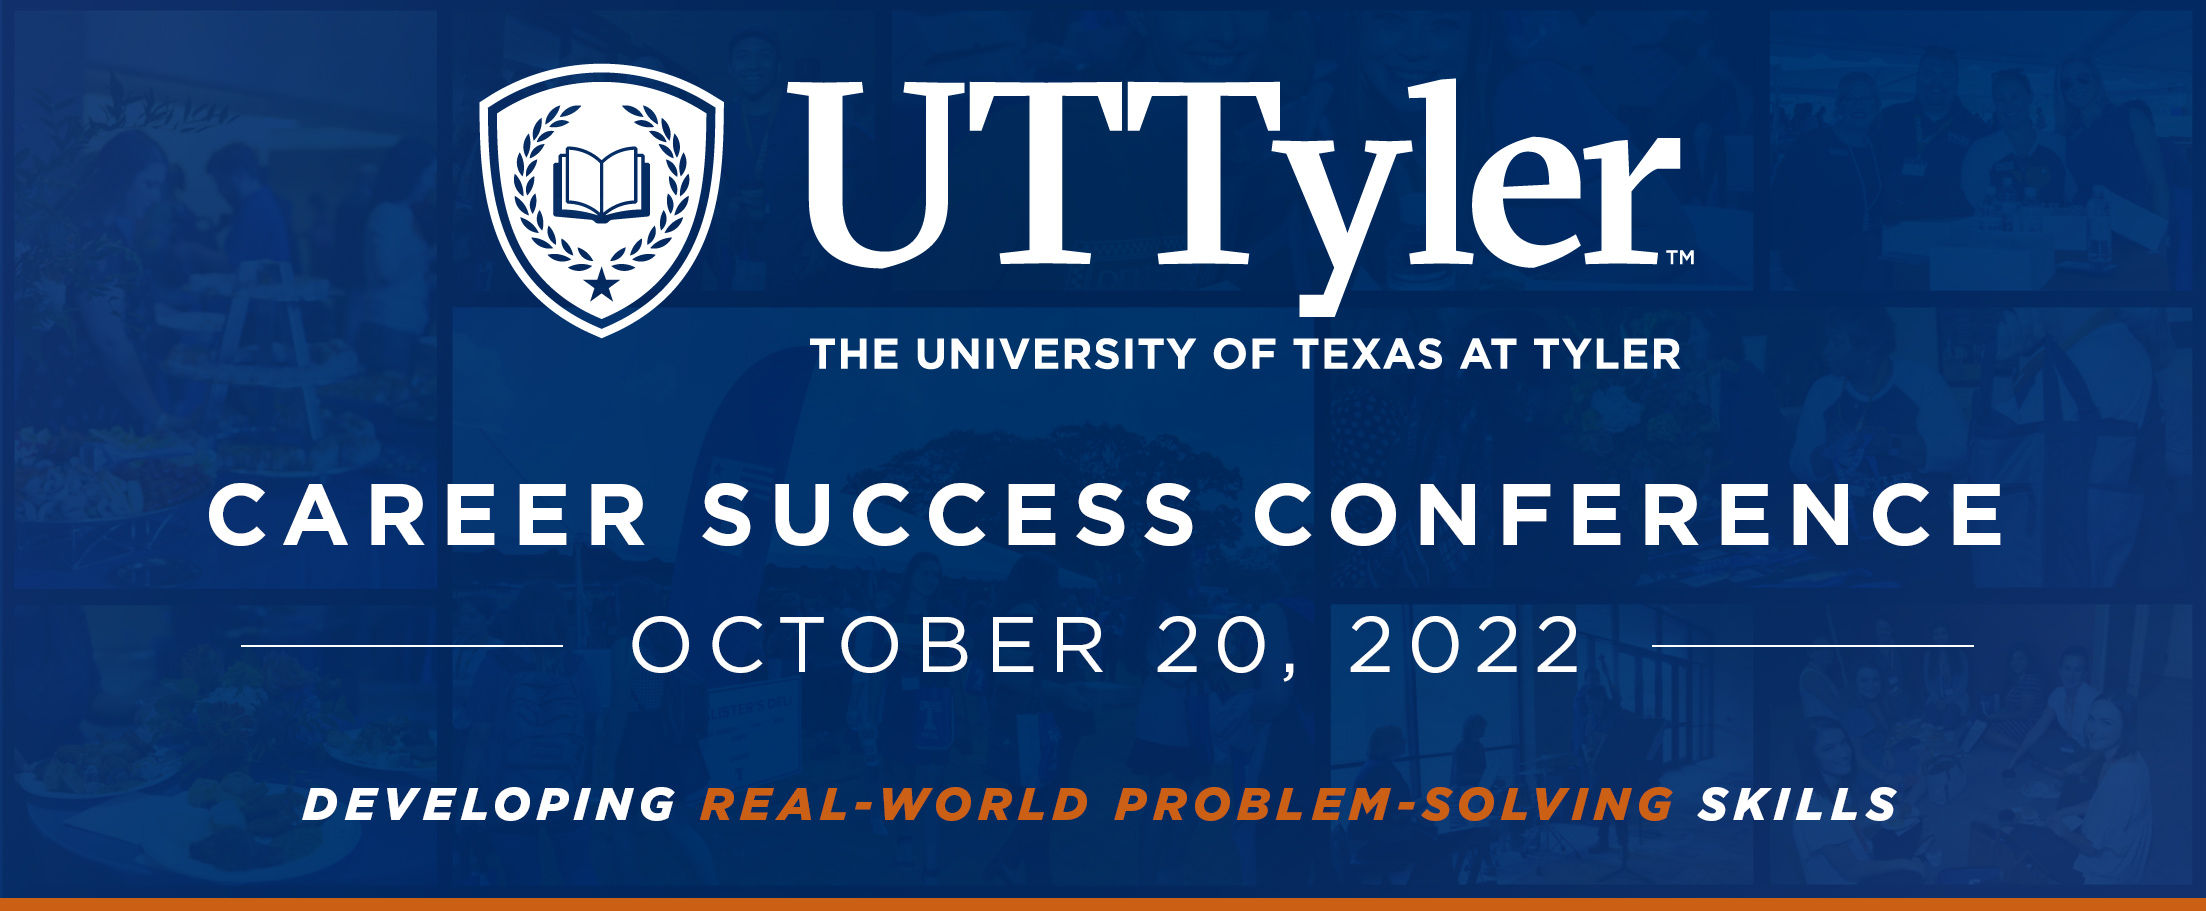 UT Tyler Career Success Conference